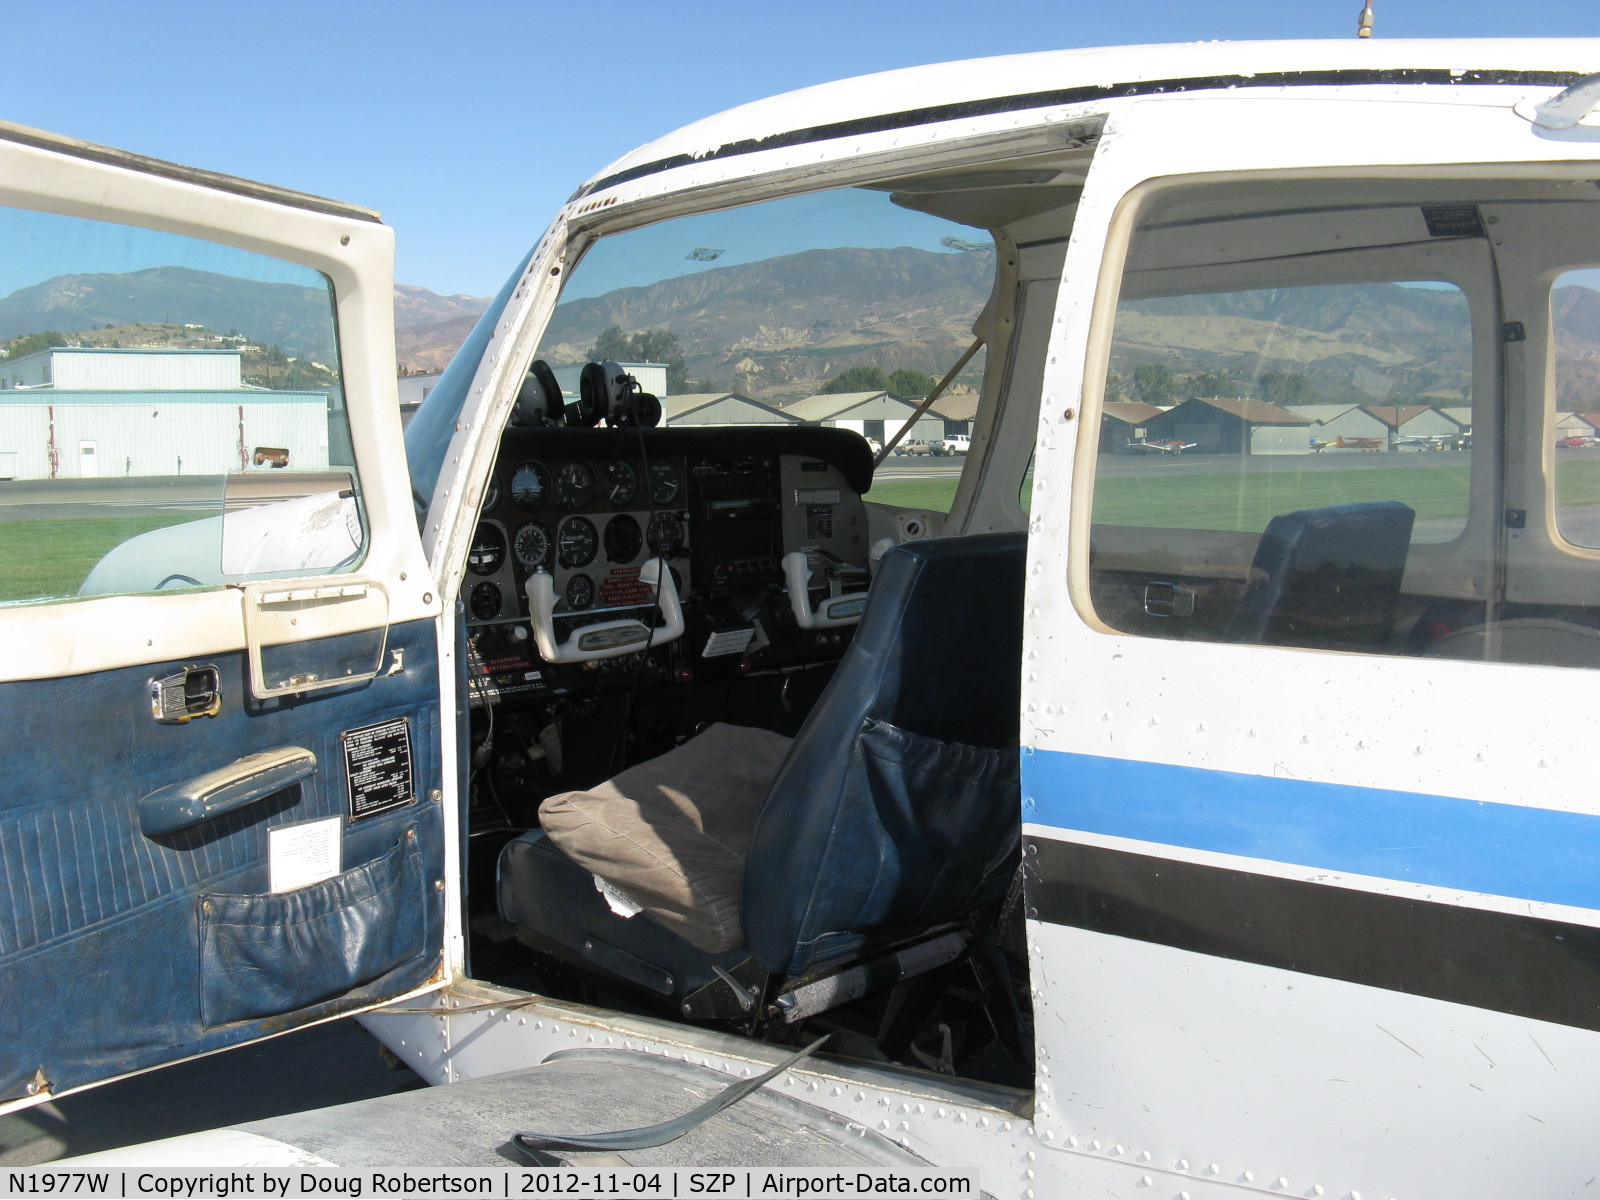 N1977W, 1974 Beech B19 Sport 150 C/N MB-655, 1974 Beech B19 SPORT 150, Lycoming O-320-E2C 150 Hp, panel, this 4 seat model has doors on both sides.